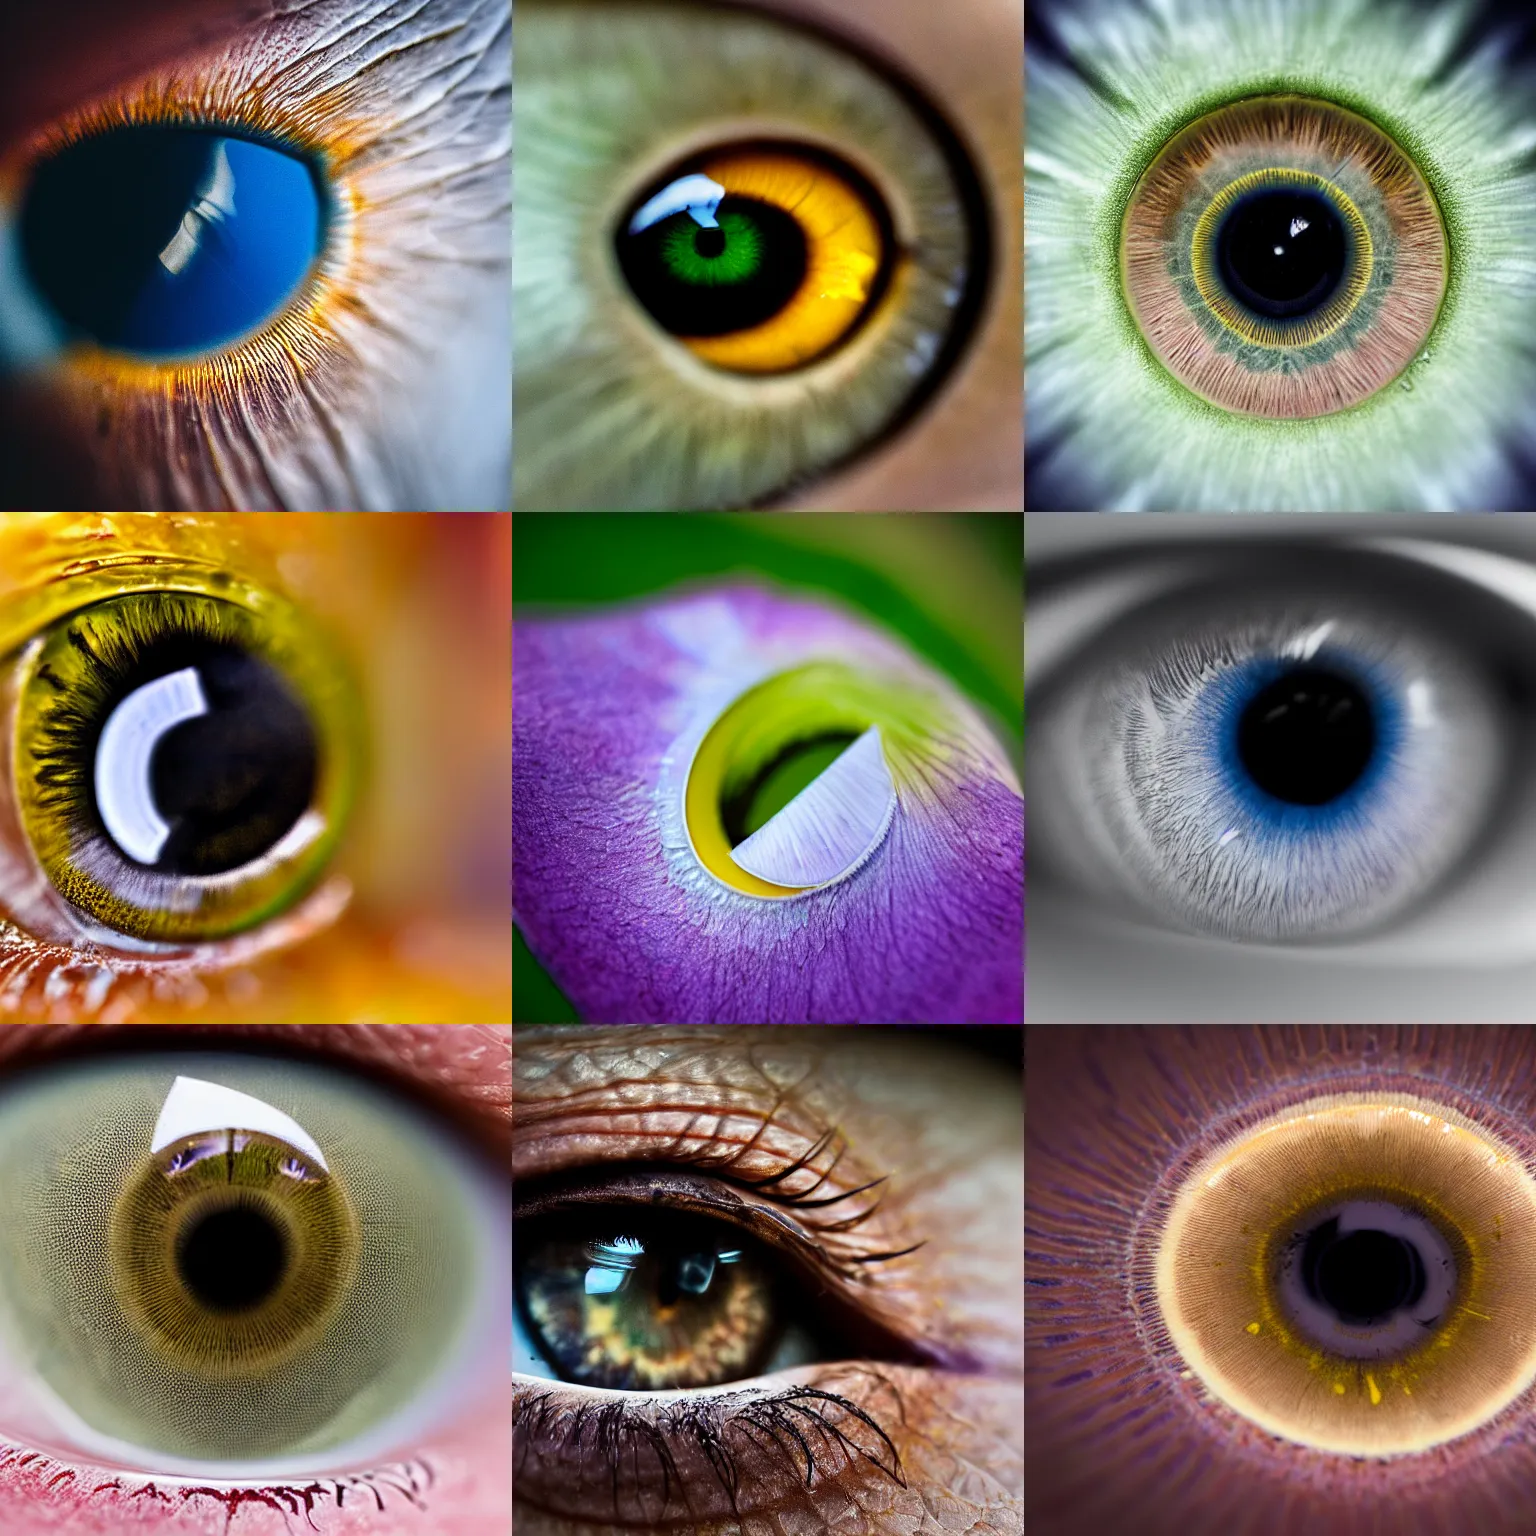 Prompt: human eye with triangular iris macro photography